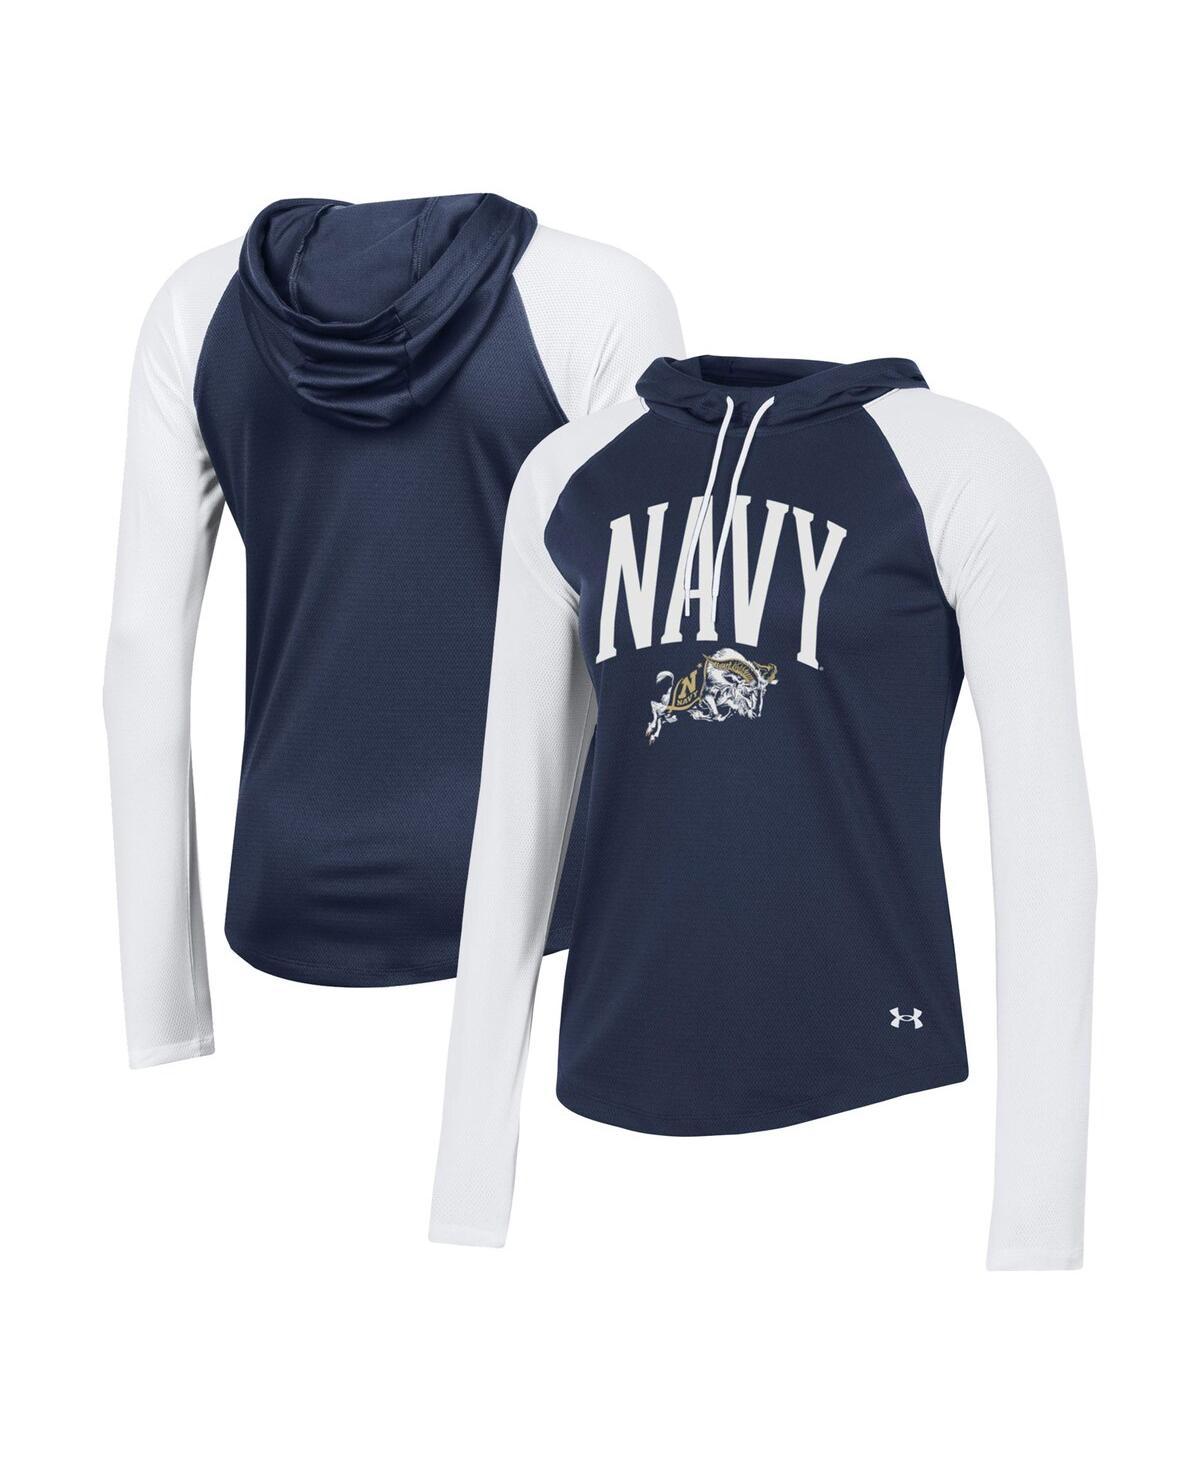 Shop Under Armour Women's  Navy Navy Midshipmen Gameday Mesh Performance Raglan Hooded Long Sleeve T-shirt